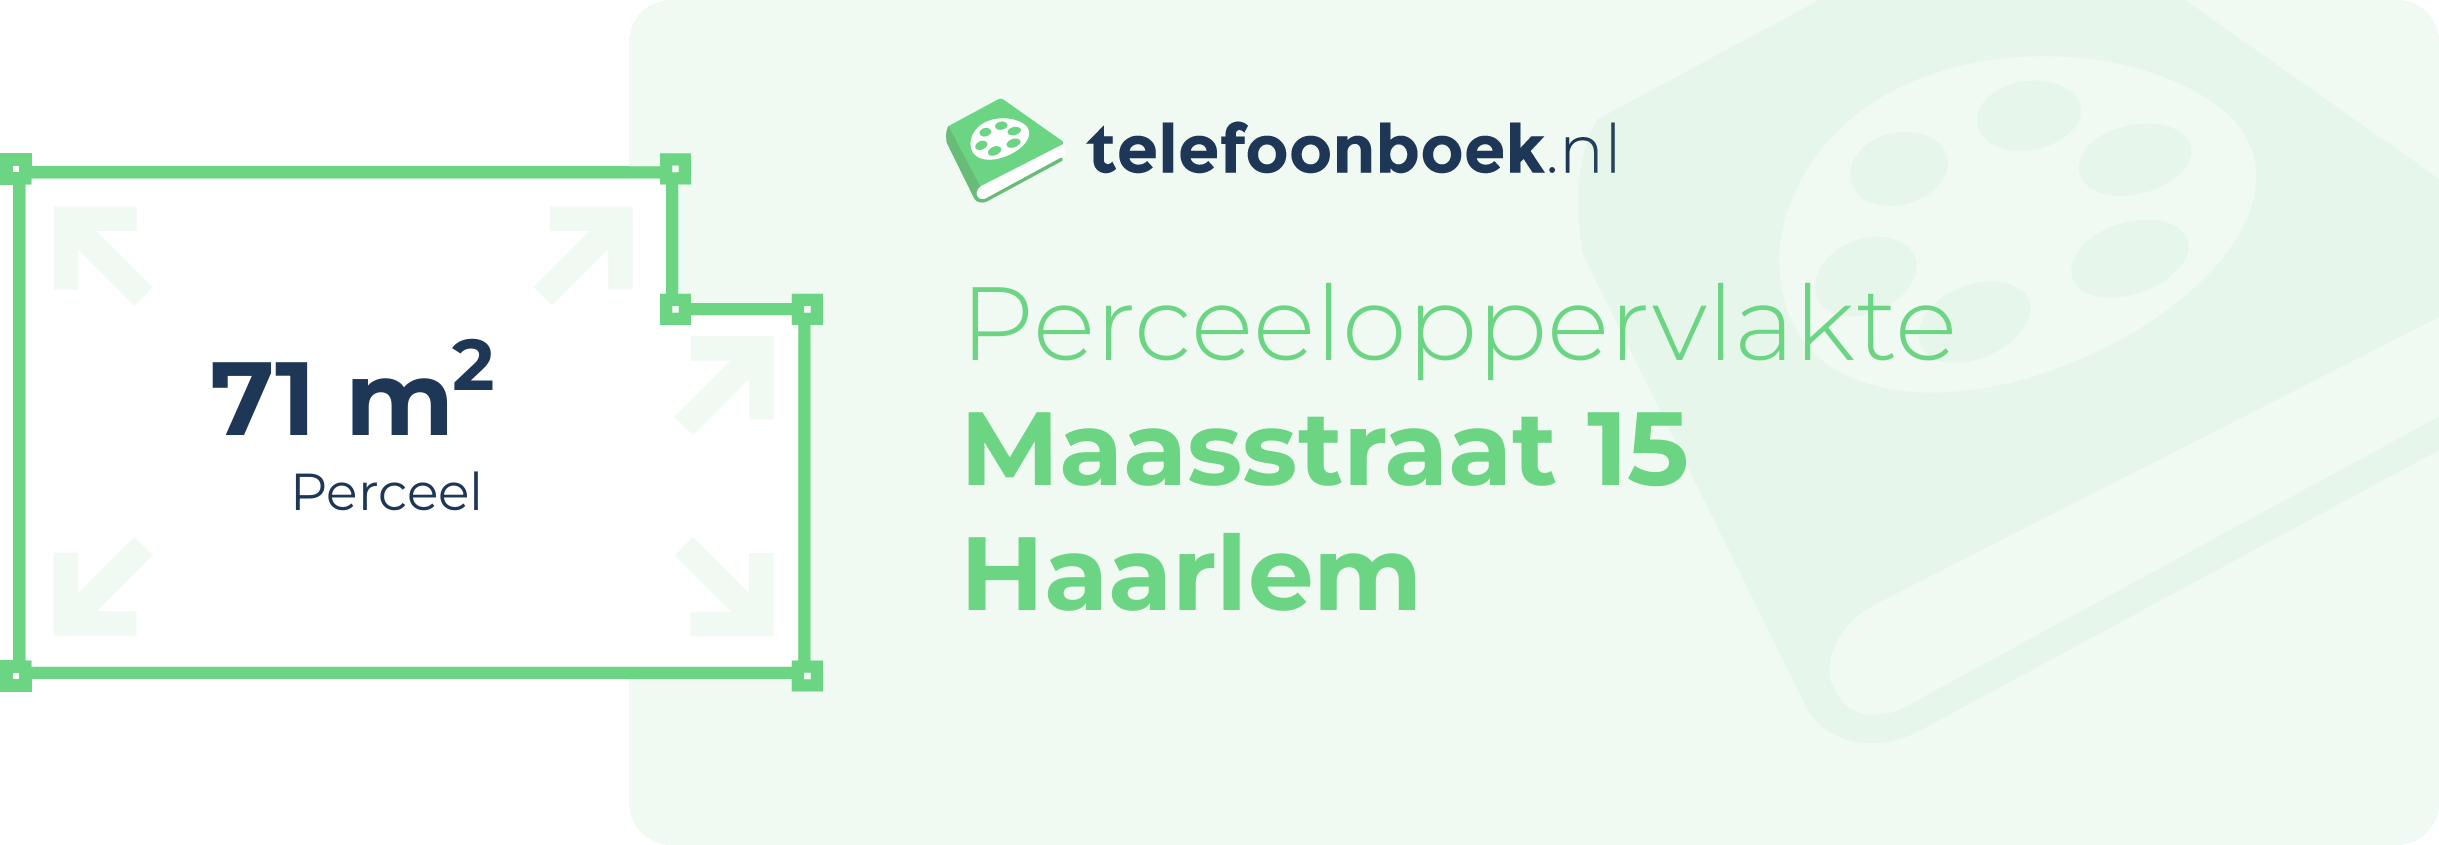 Perceeloppervlakte Maasstraat 15 Haarlem